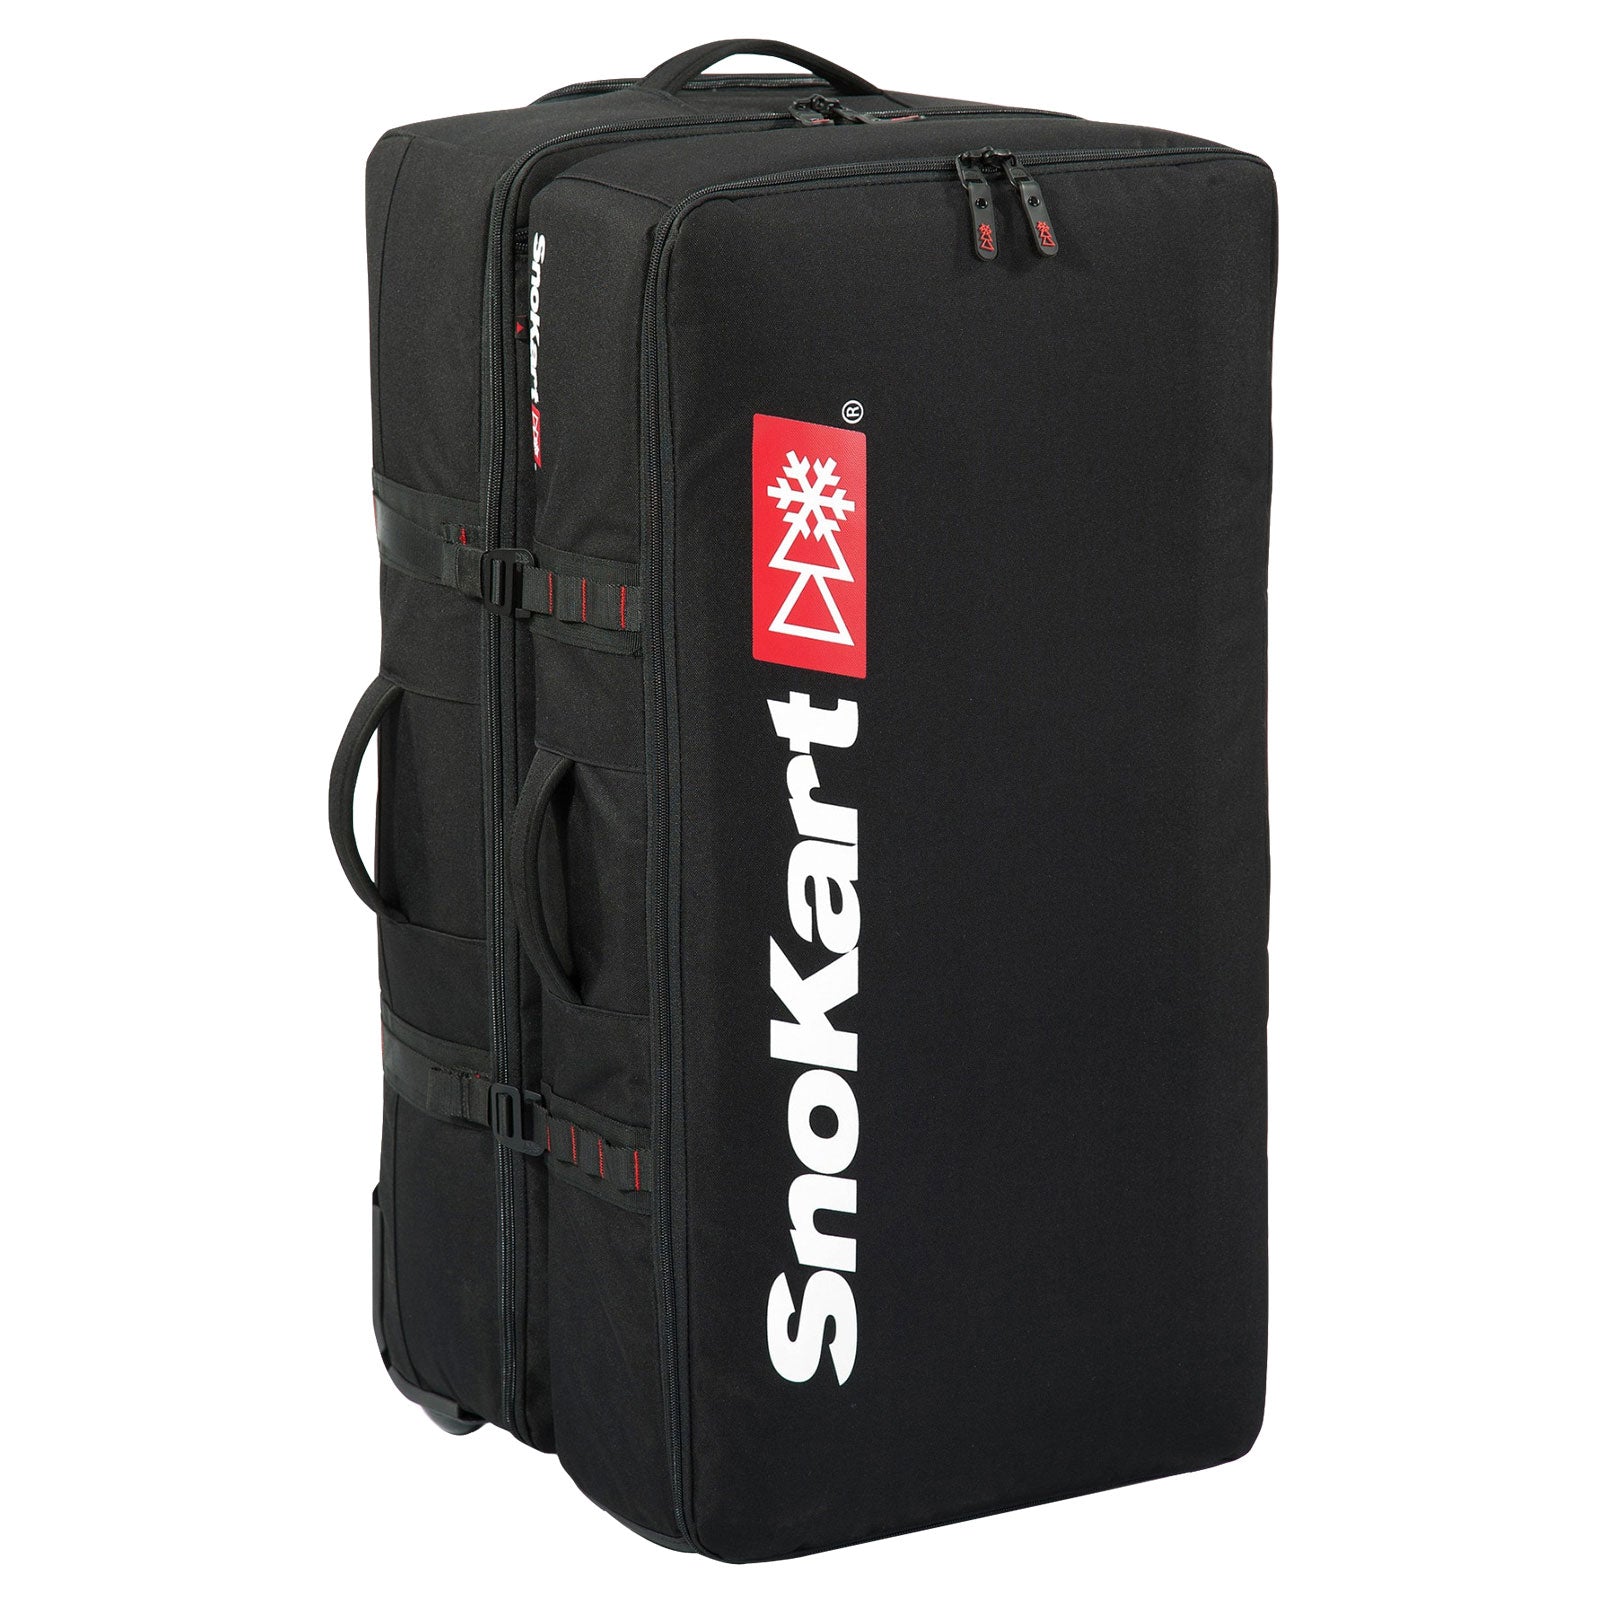 Snokart Kargo 100 Luggage System